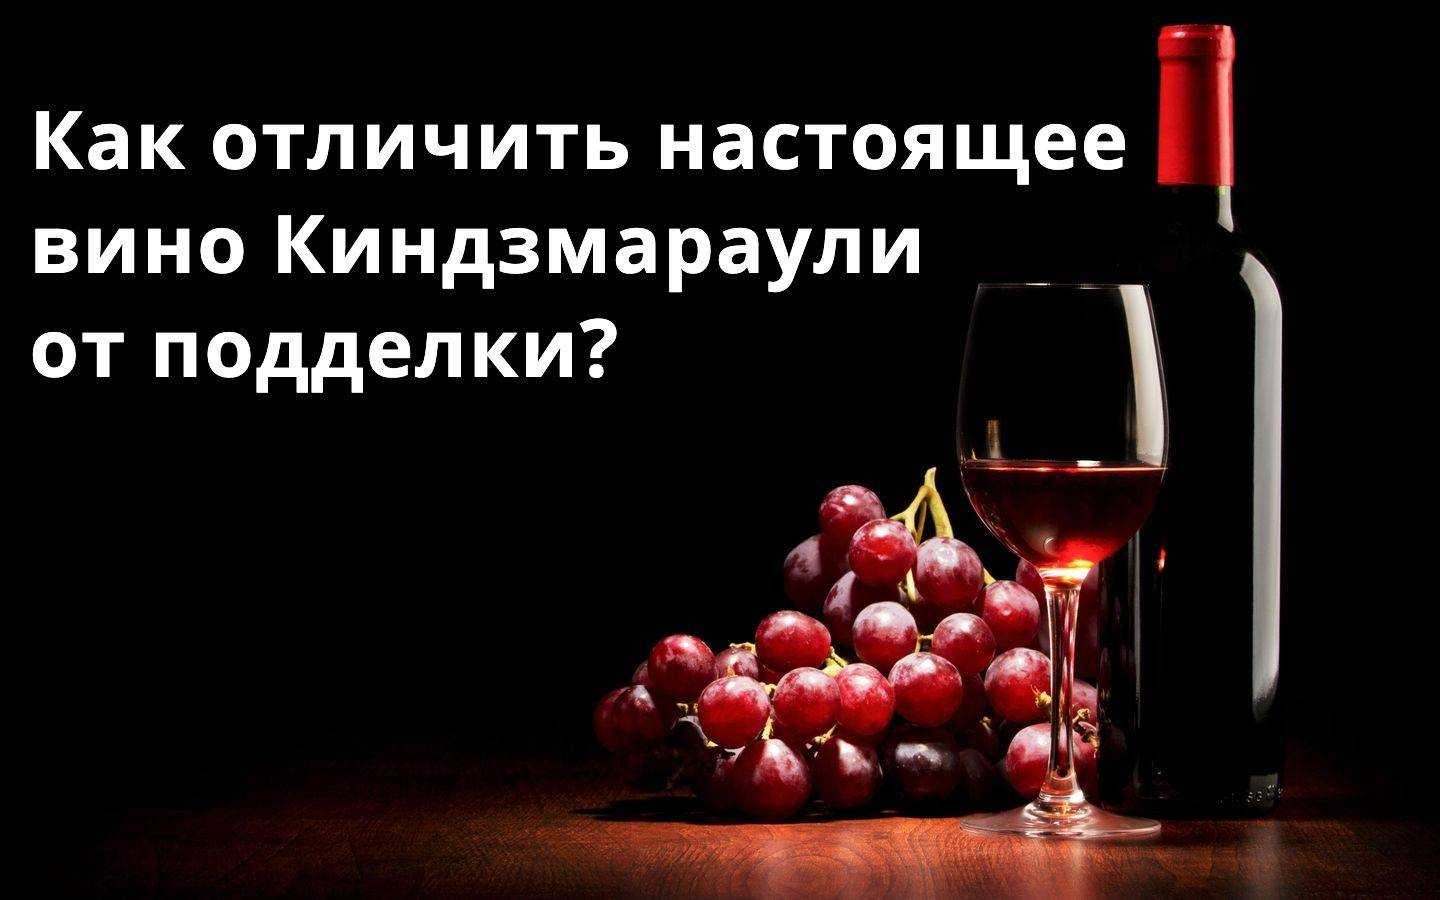 Любимое вино сталина – грузинское киндзмараули – сайт о винограде и вине